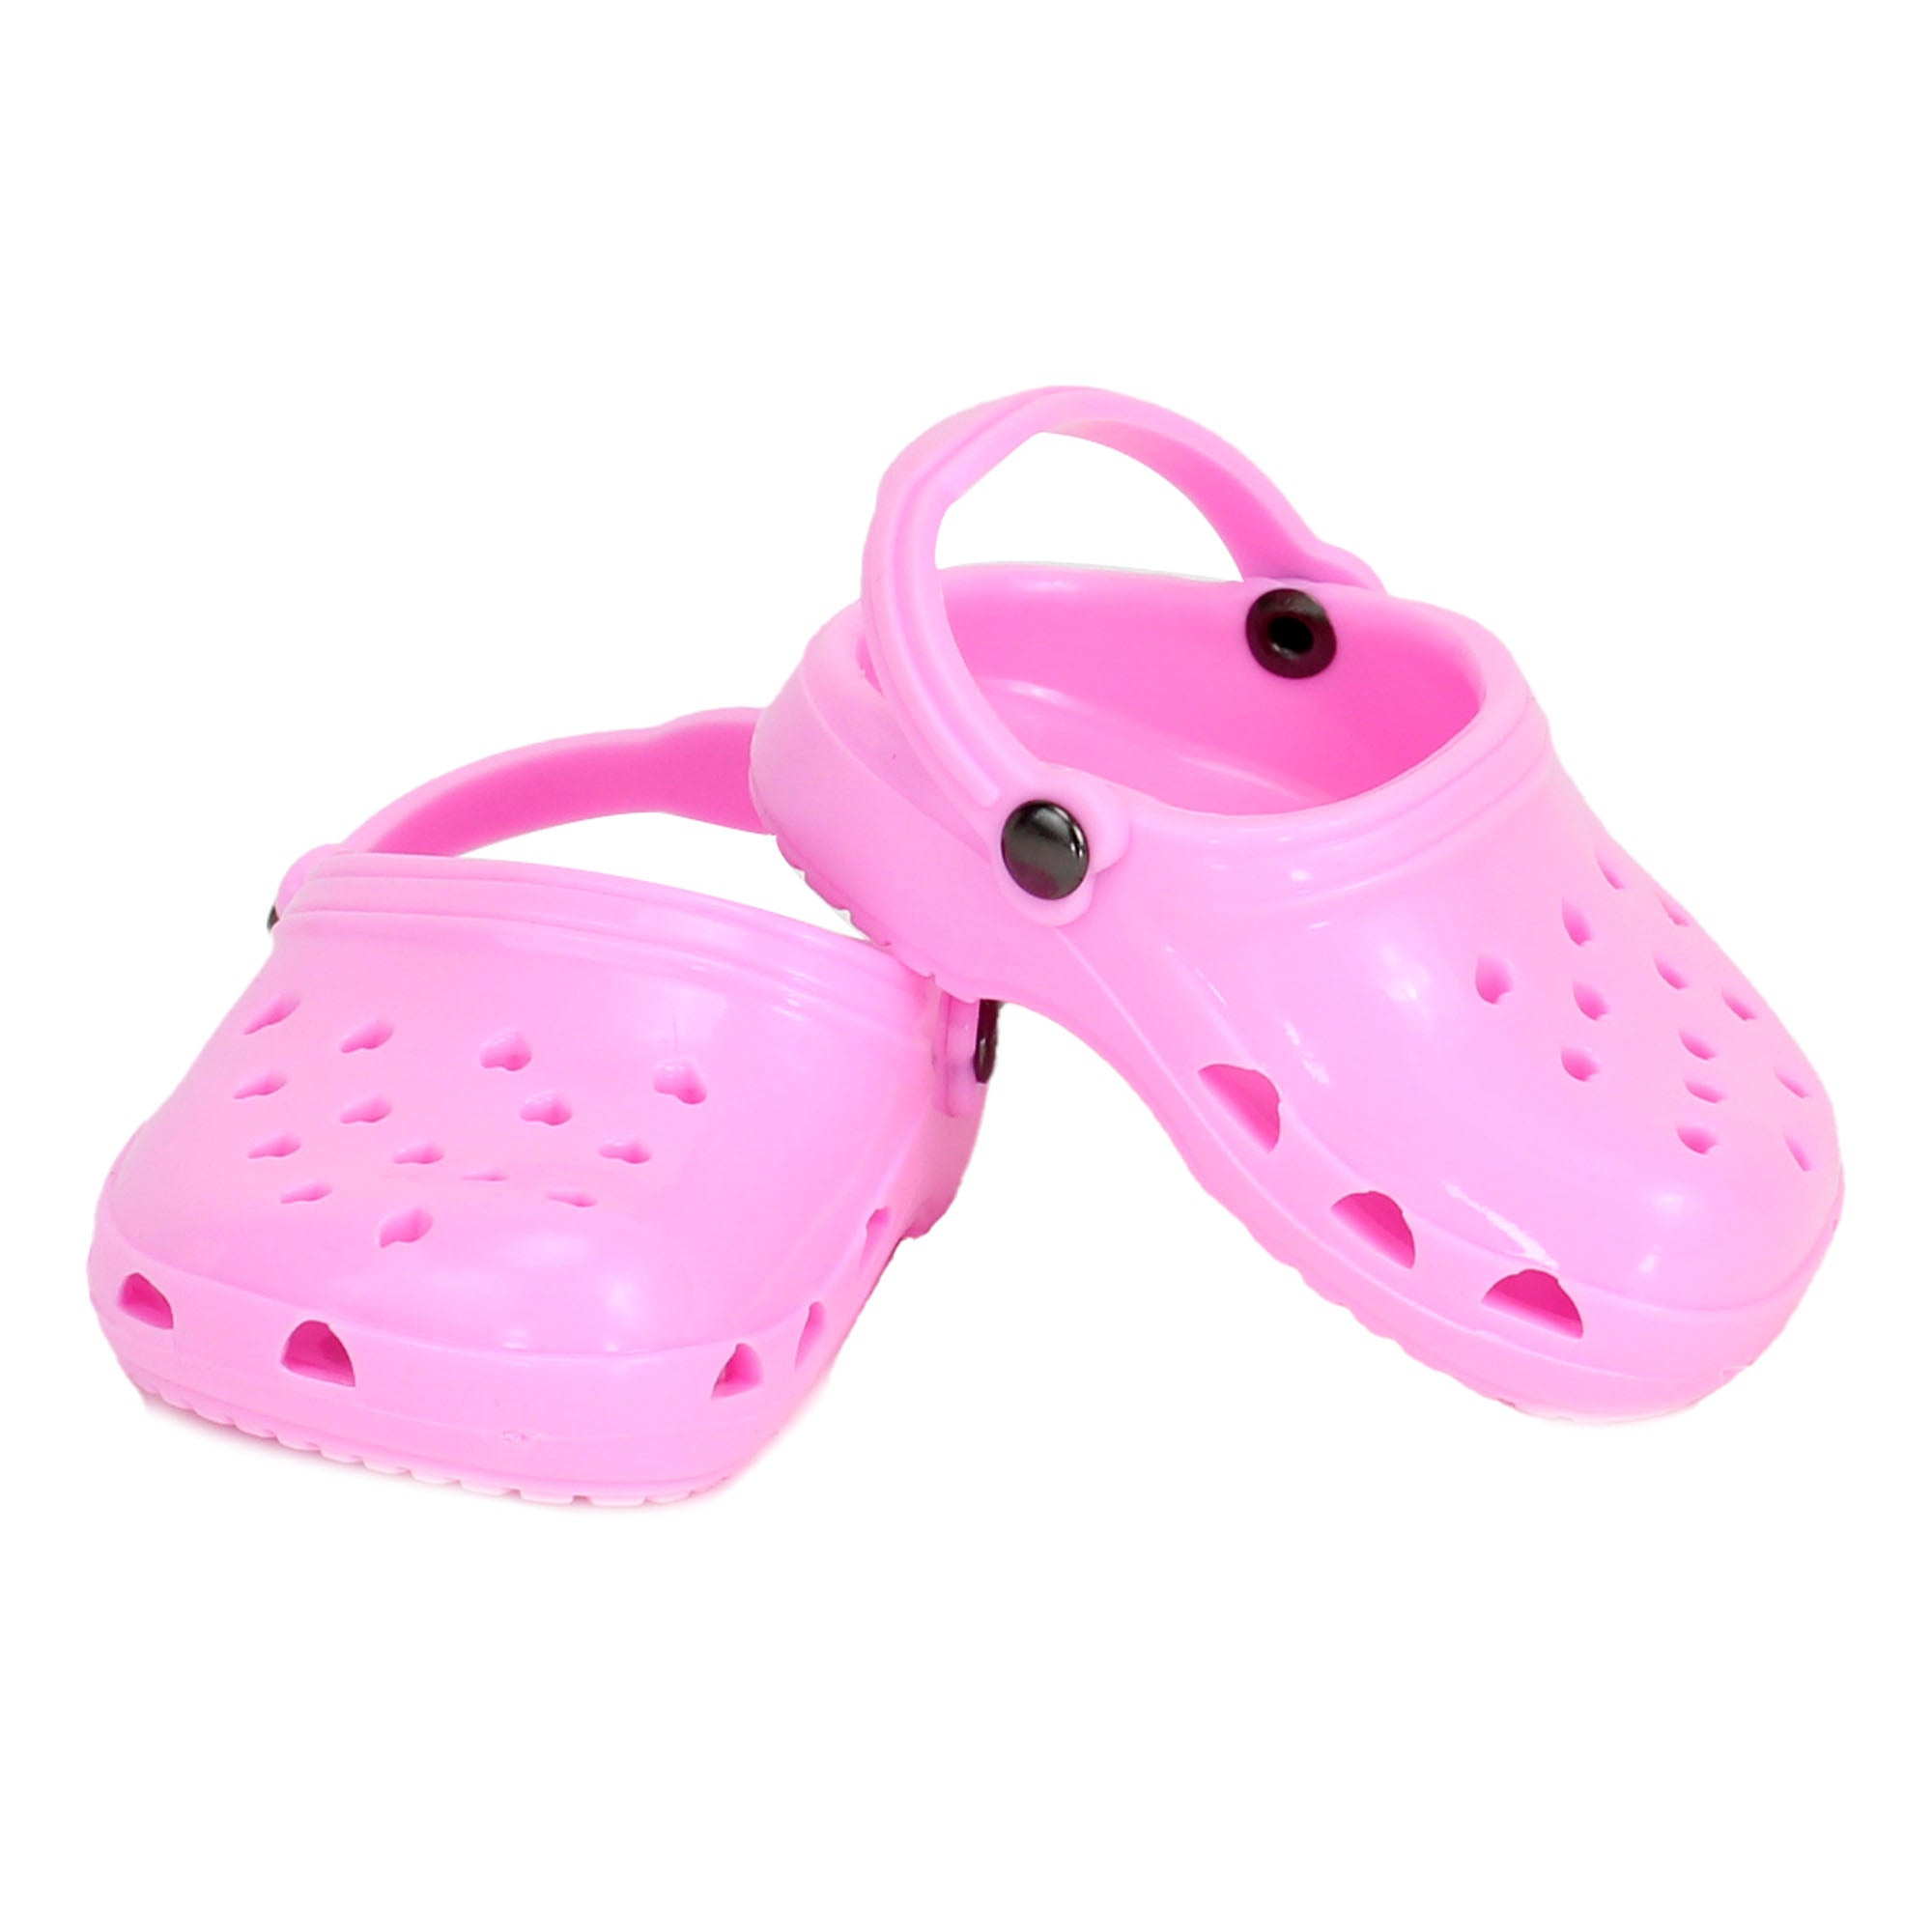 Sophias Clog Sandal Shoes Accessory for 18" Dolls, Light Pink